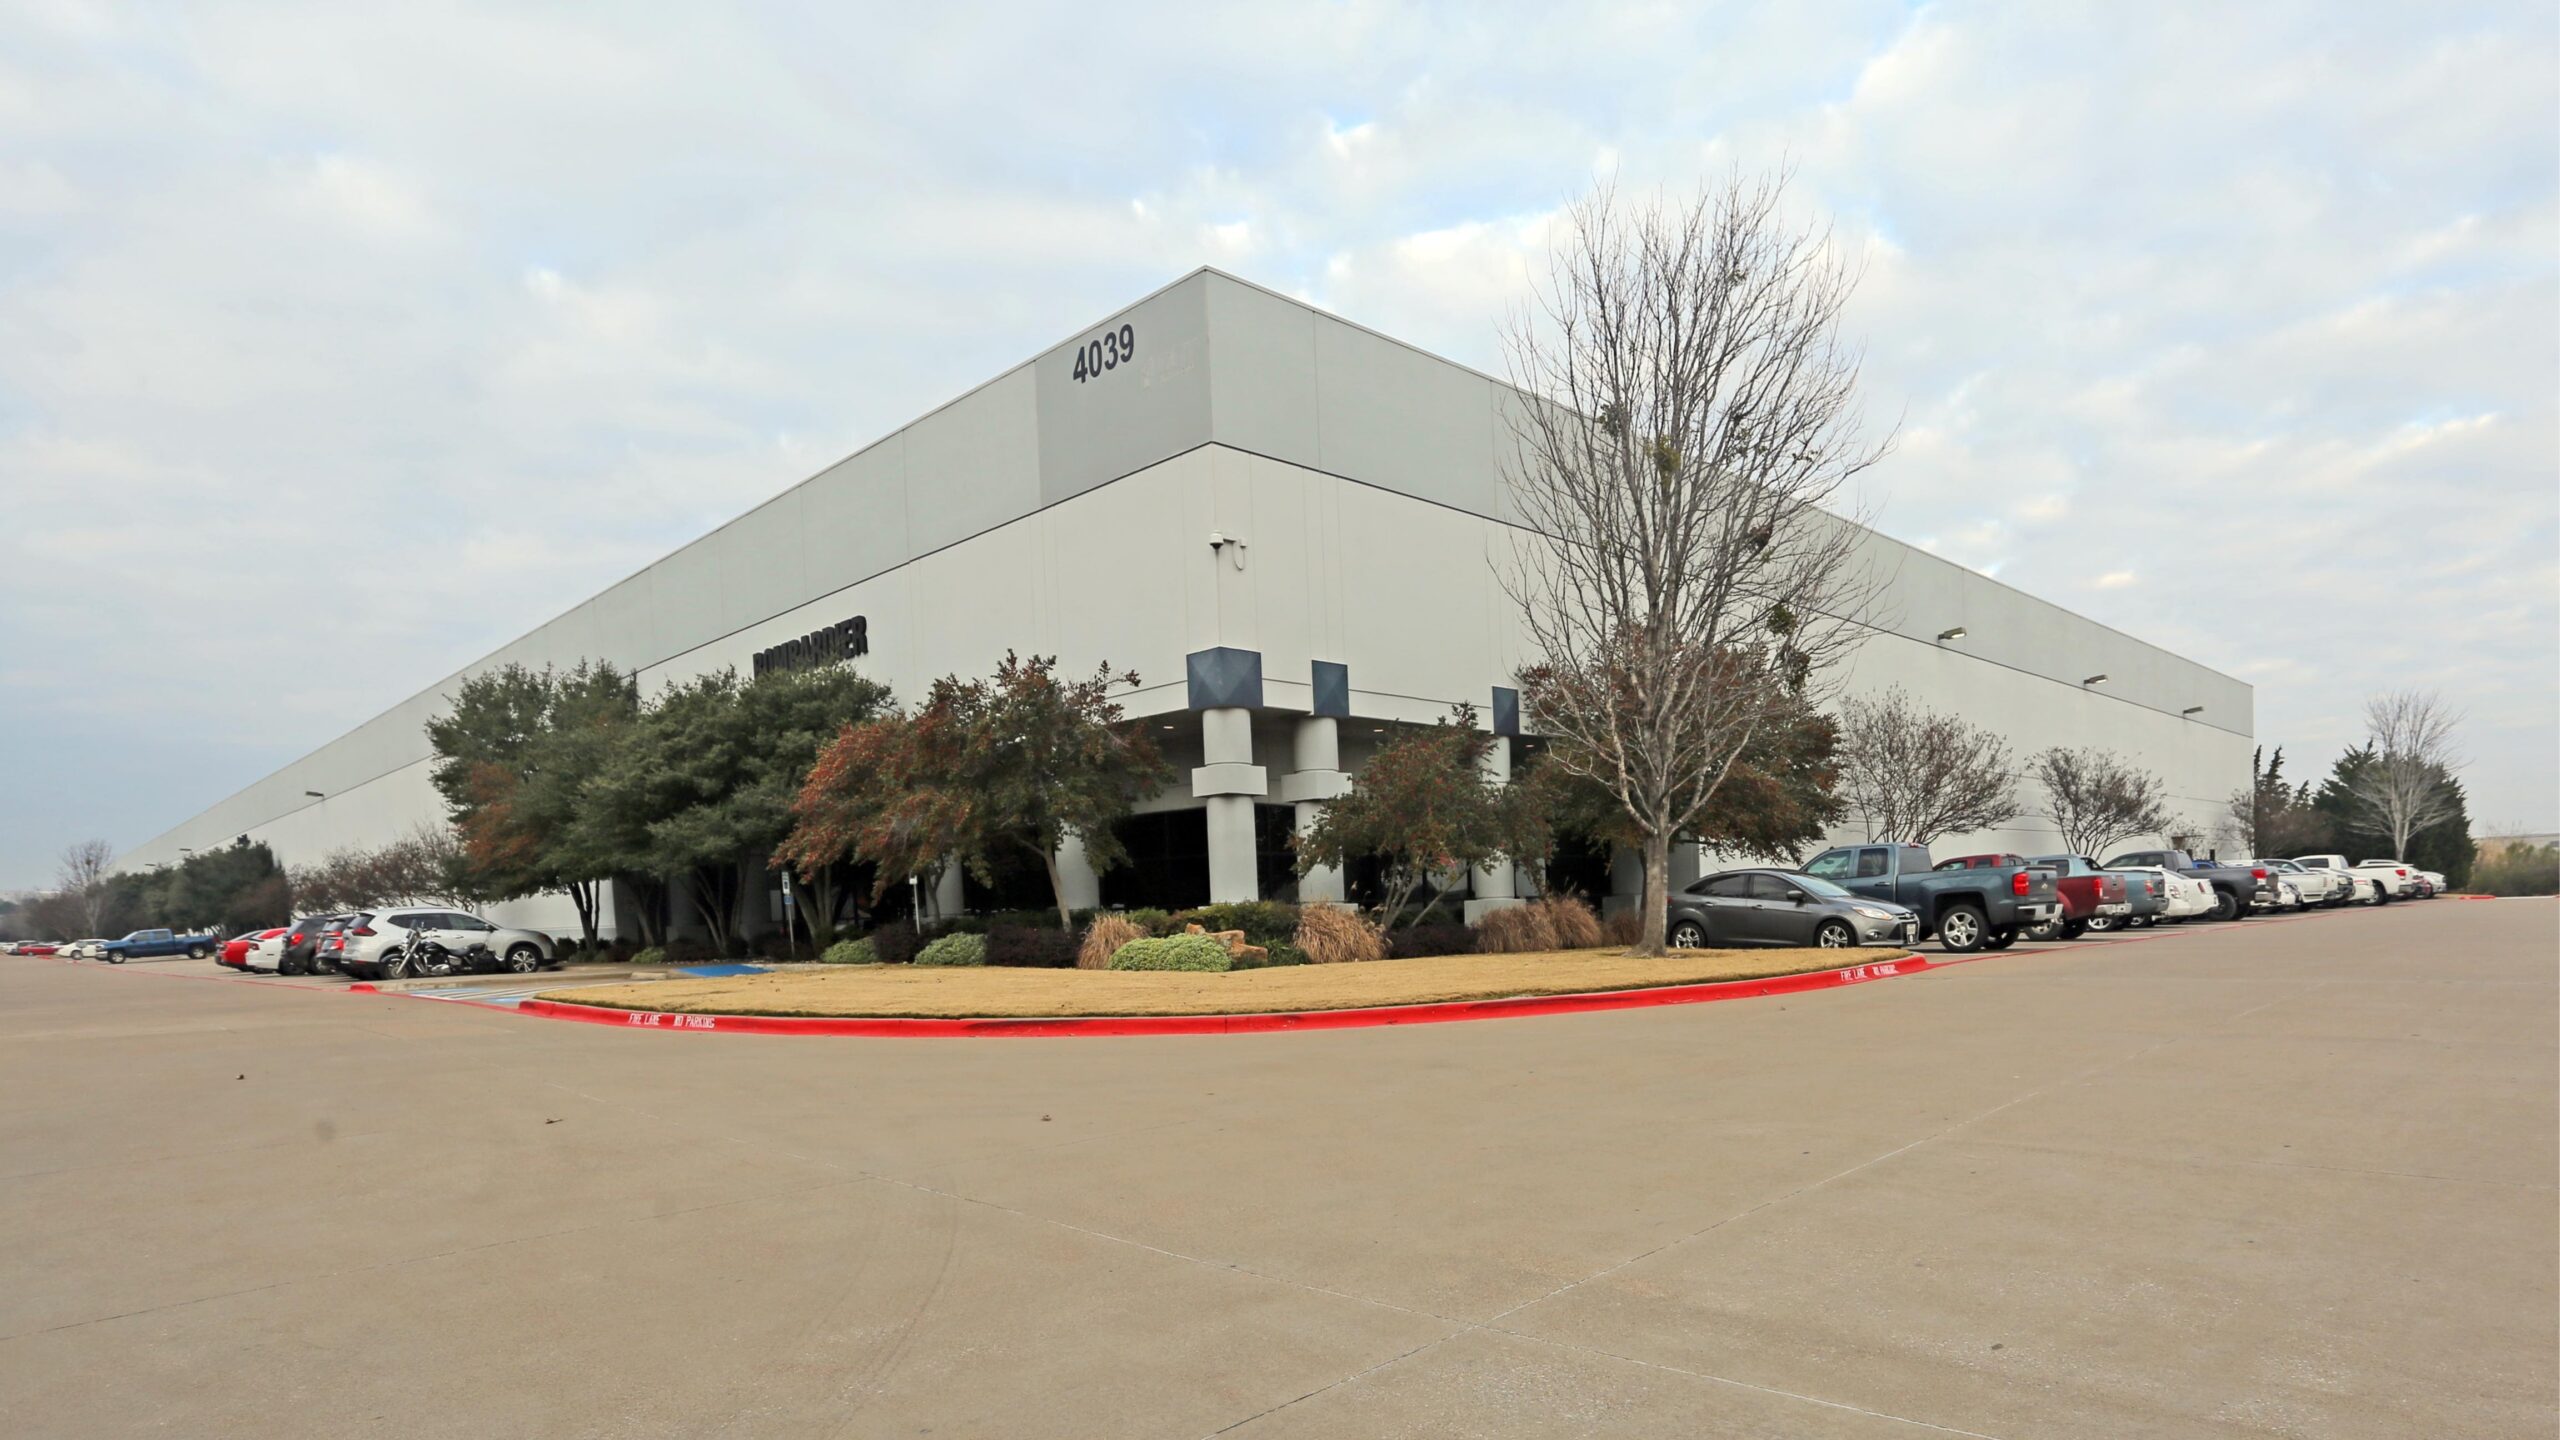 Lee & Associates Dallas Fort Worth Negotiates a 50,000 SF Industrial Lease Transaction